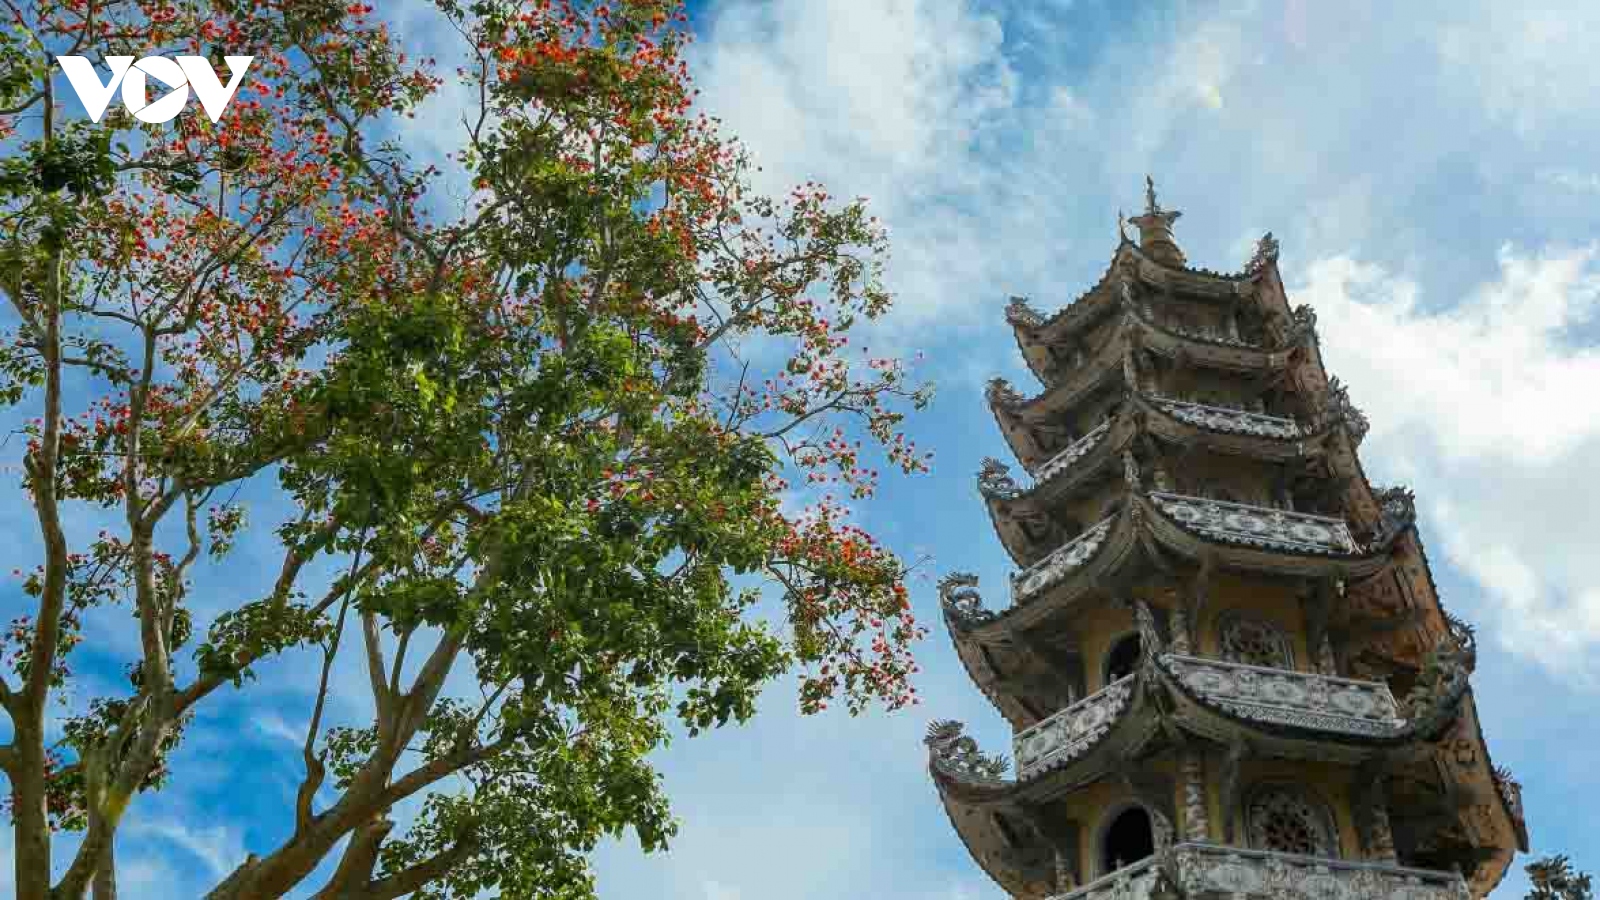 An insight into a beautiful Buddhist shrine in Da Lat city